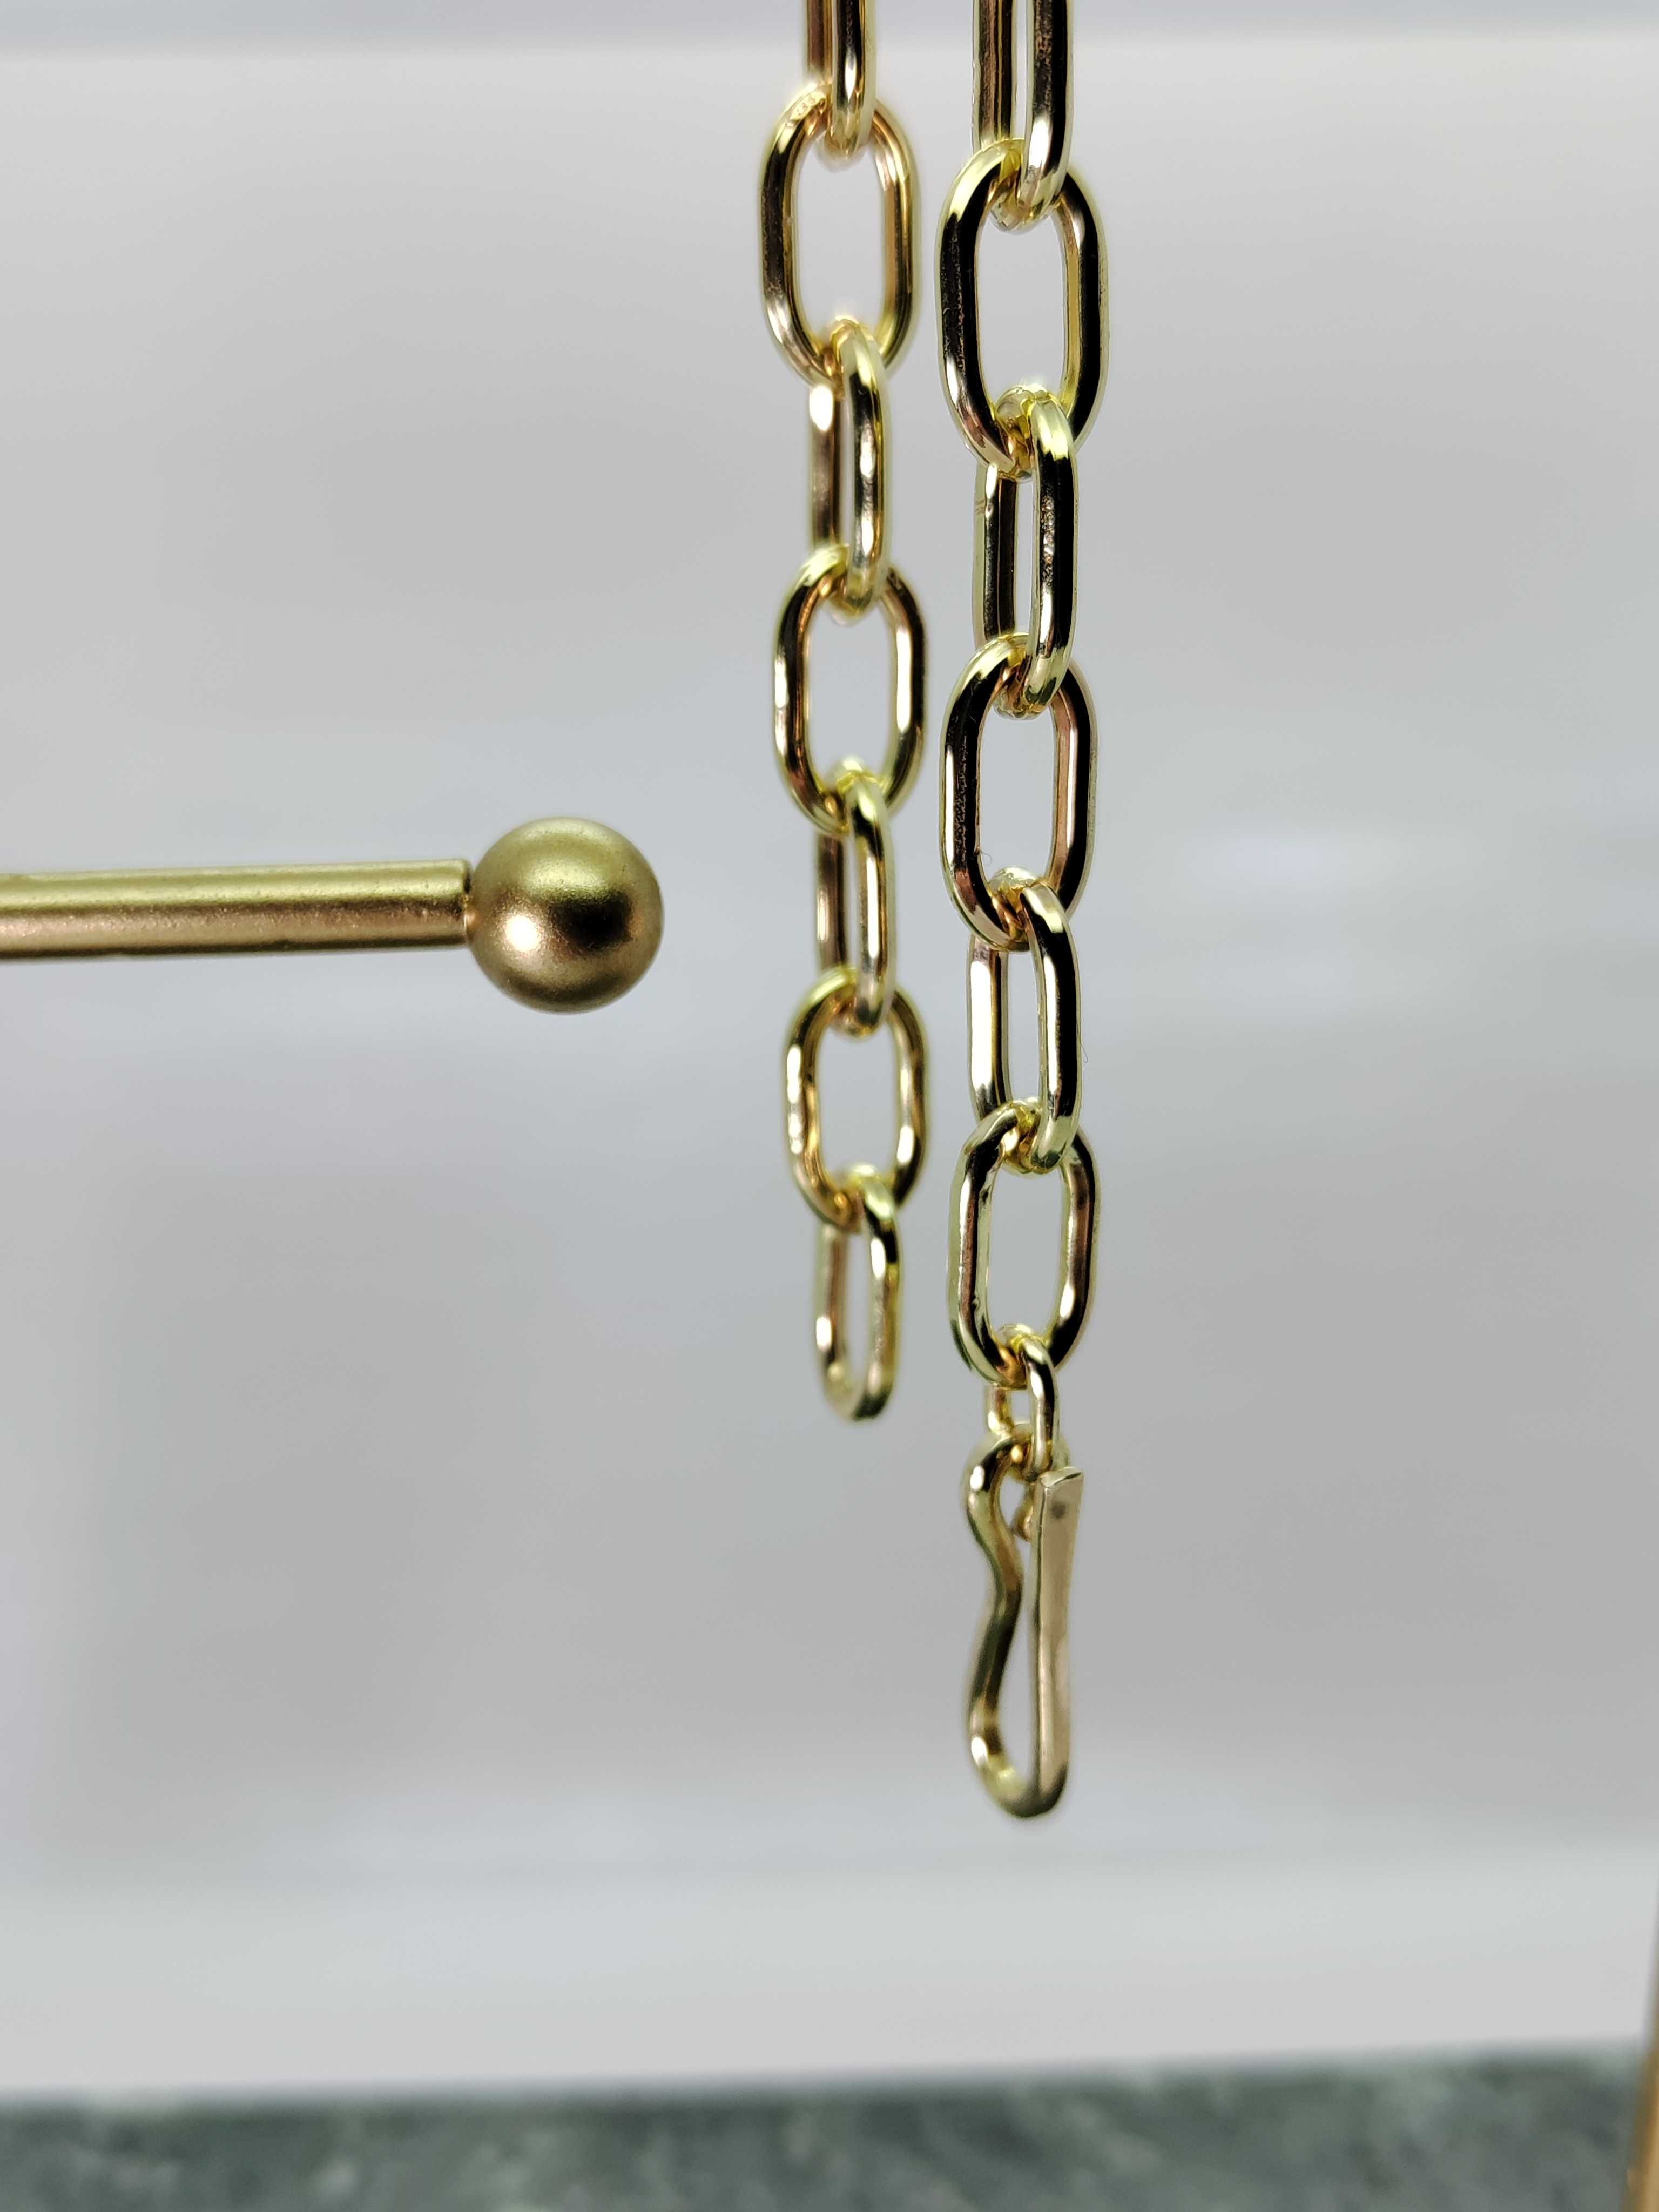 Piękna złota bransoleta (próba 585]. 19cm/17.88g. Niska cena.